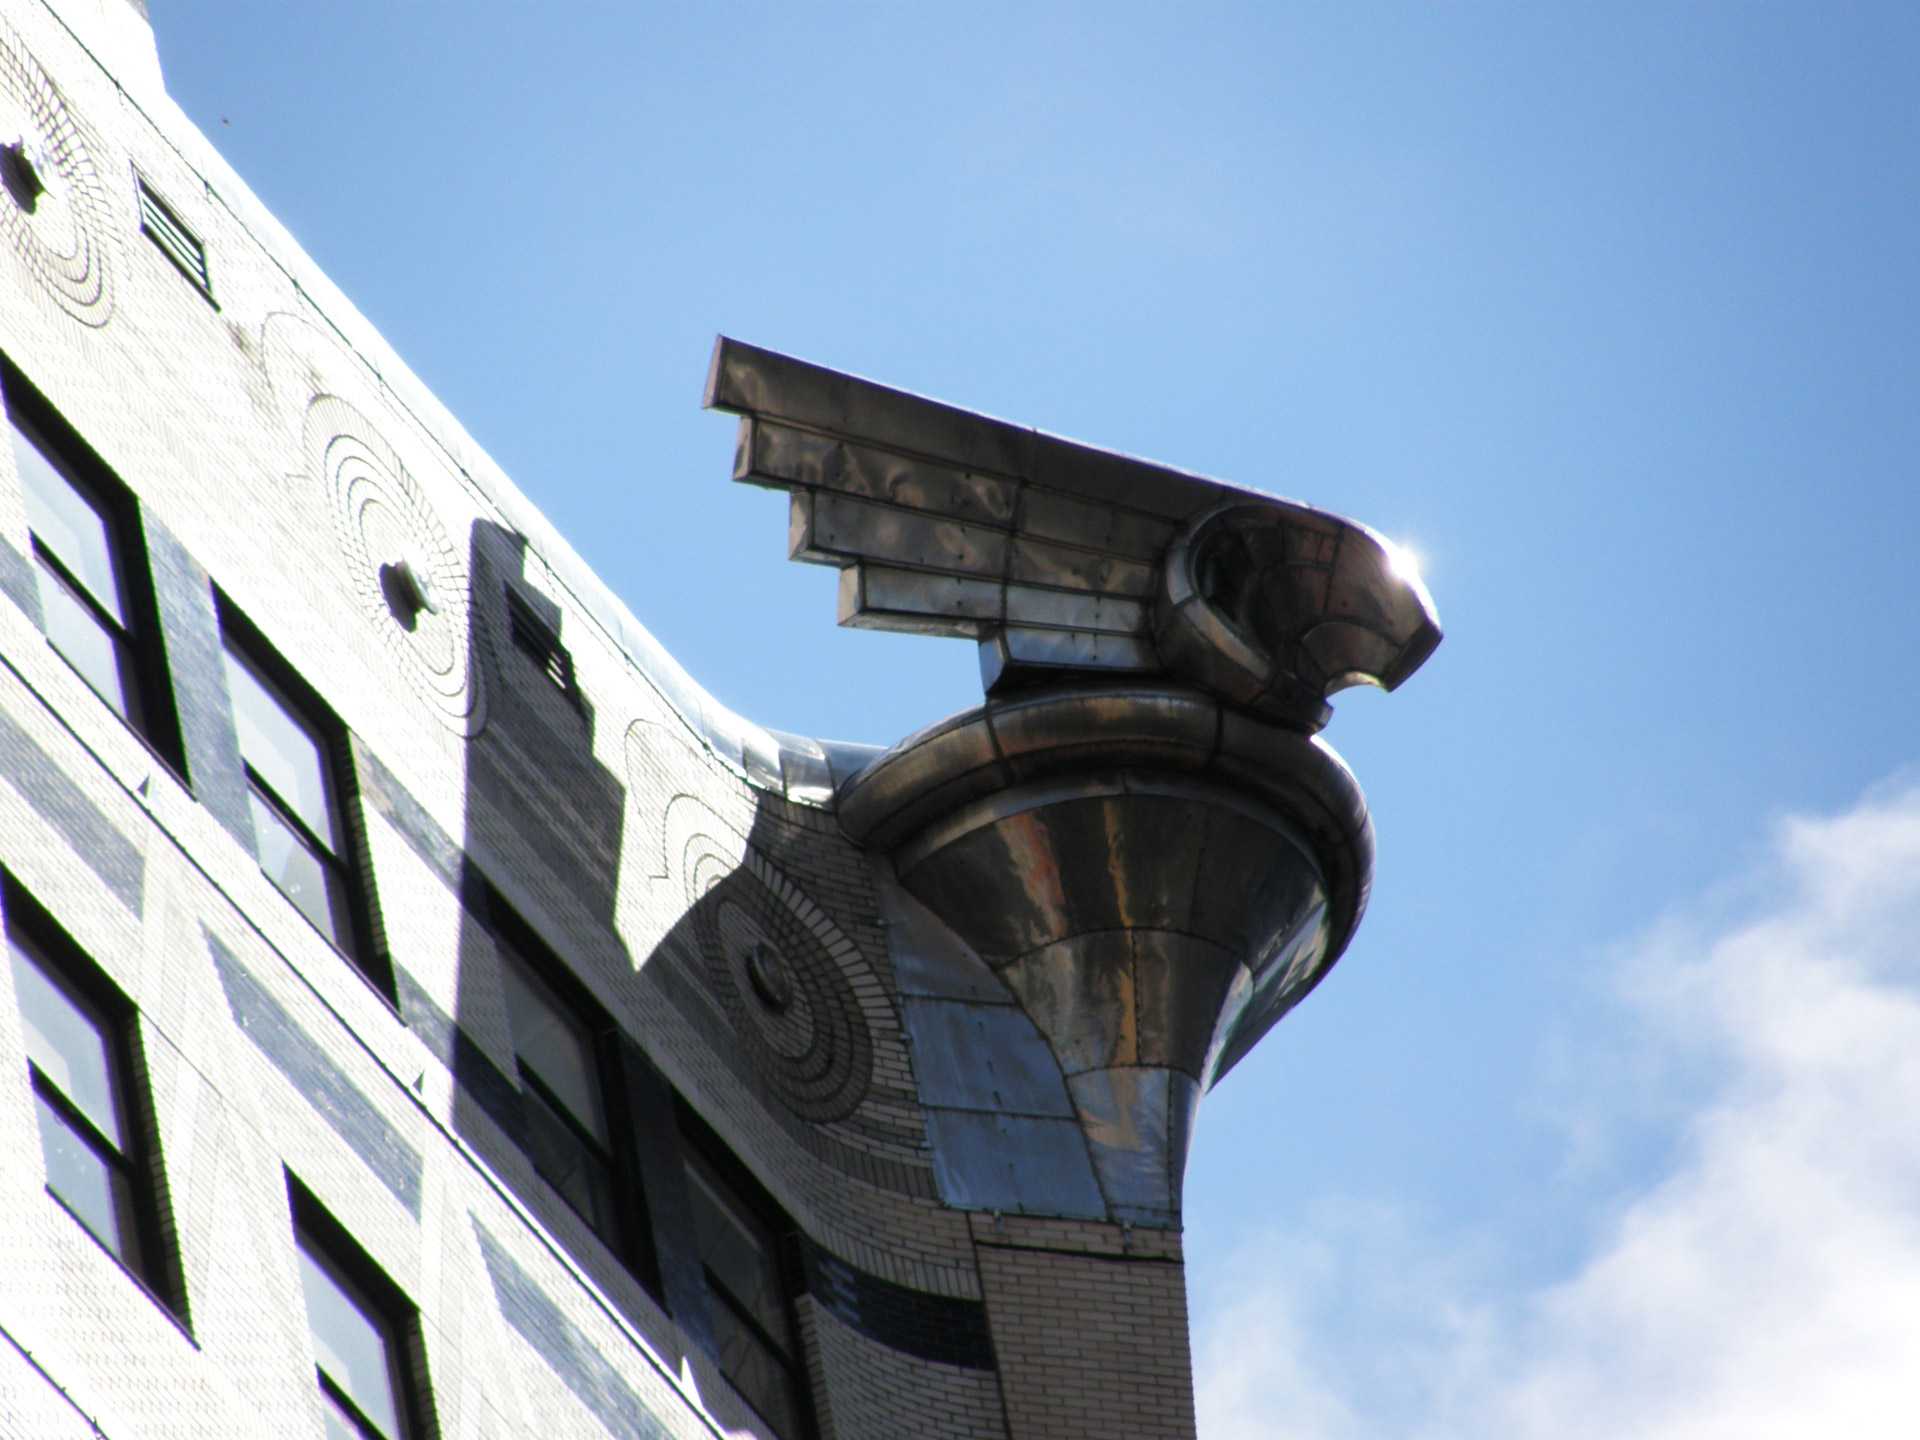 Eagle gargoyle on top of a building